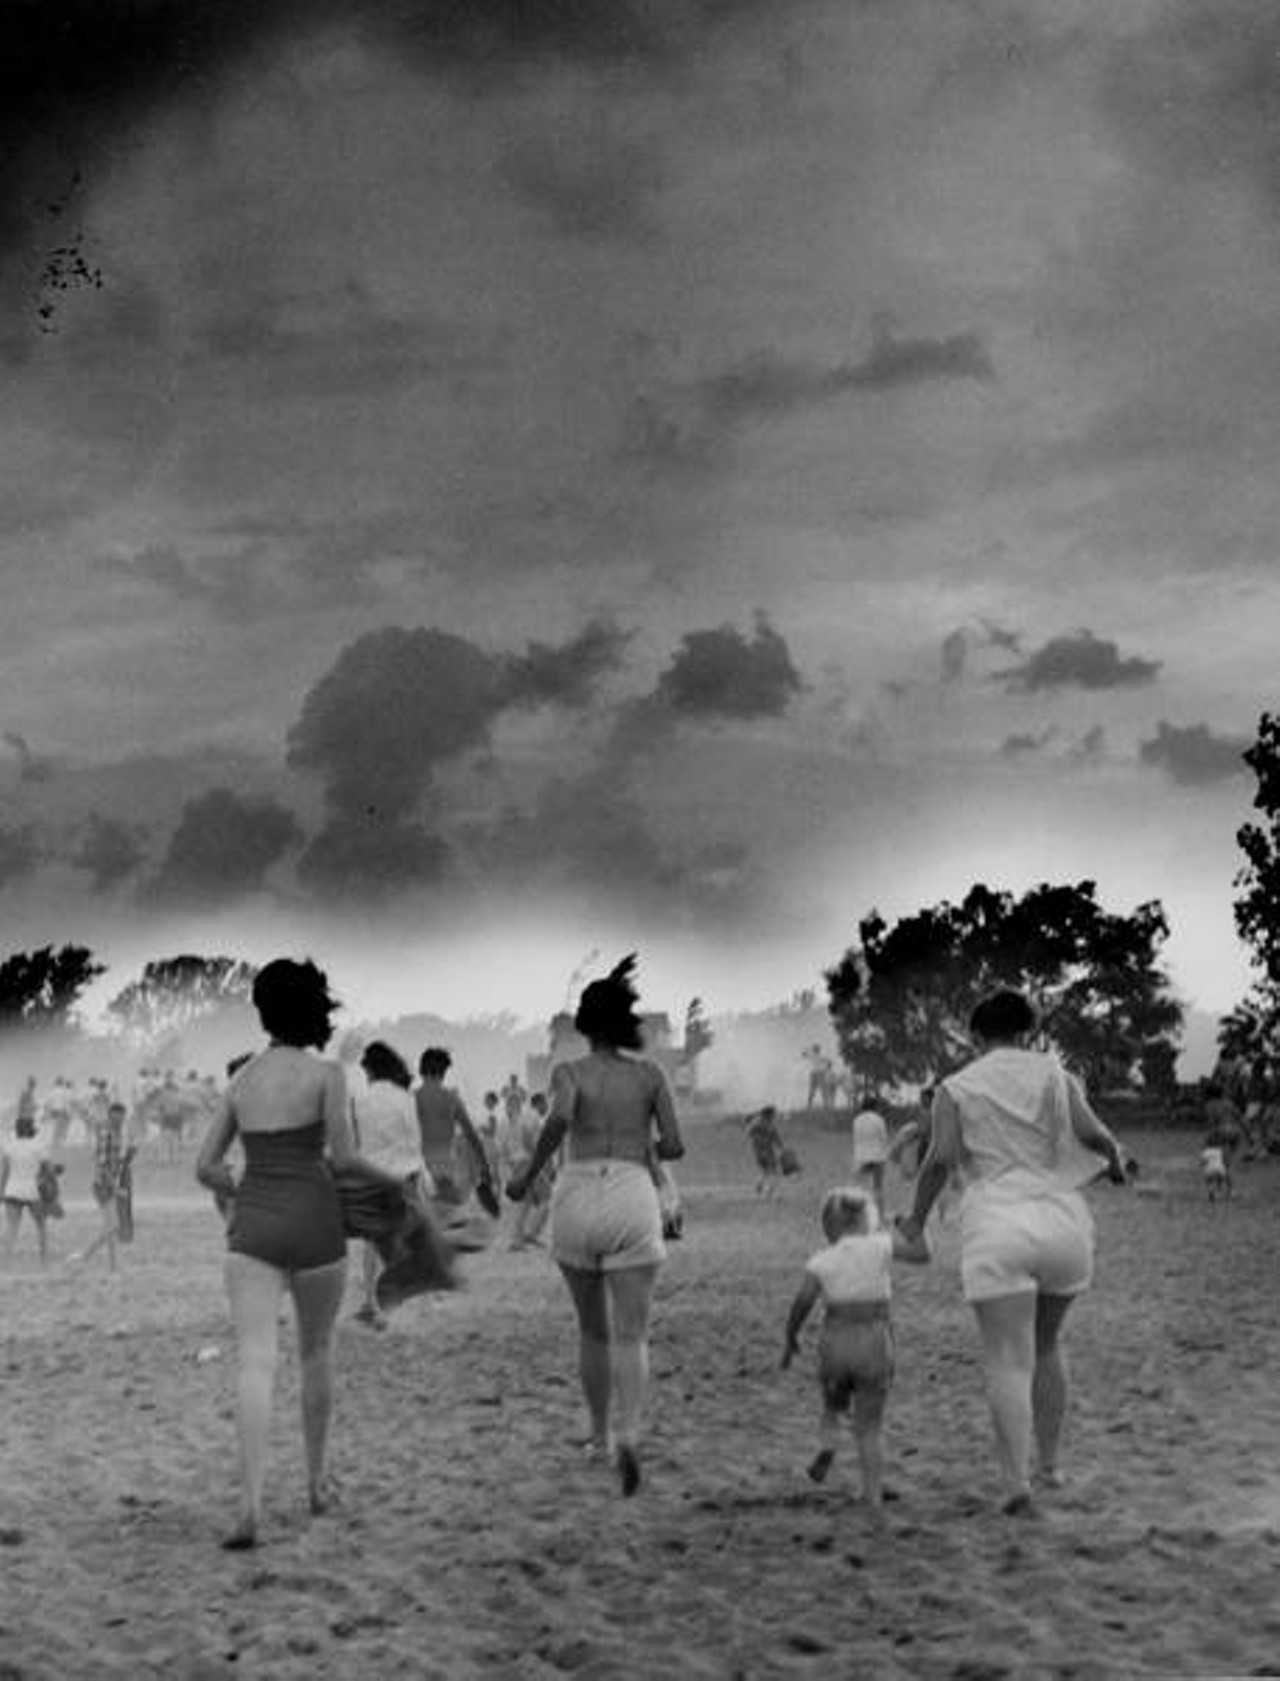  Beachgoers Escaping a Storm, 1956 